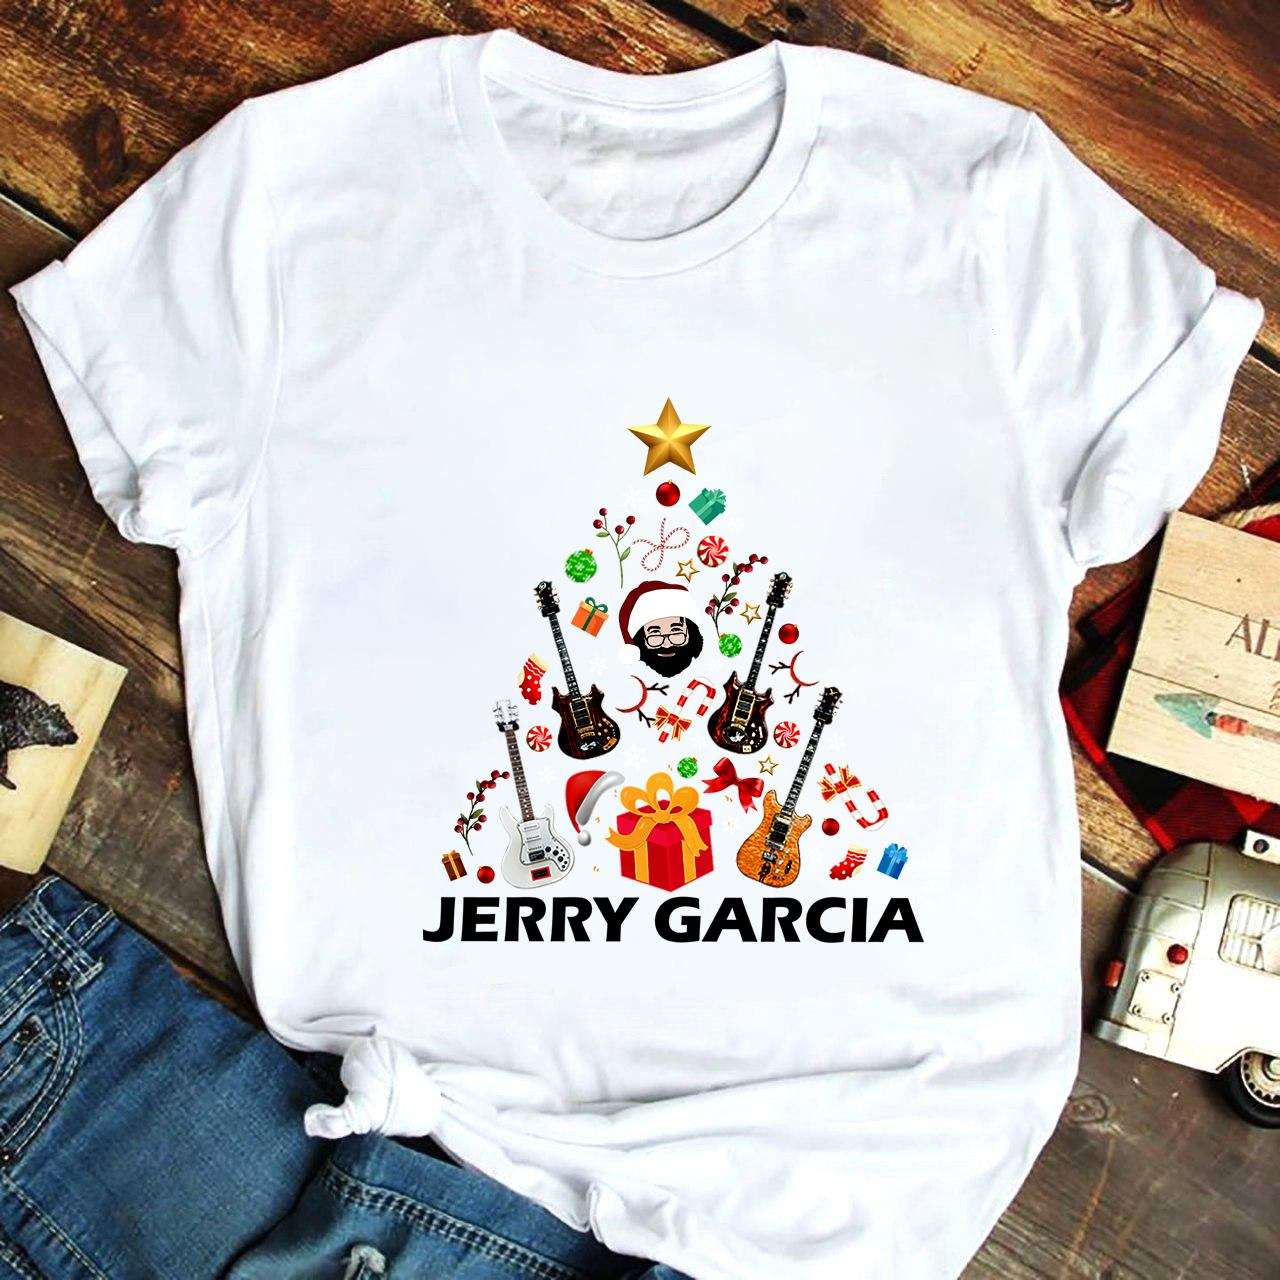 Guitar Christmas Tree, Gift for guitarist - Jerry Garcia Guitarist